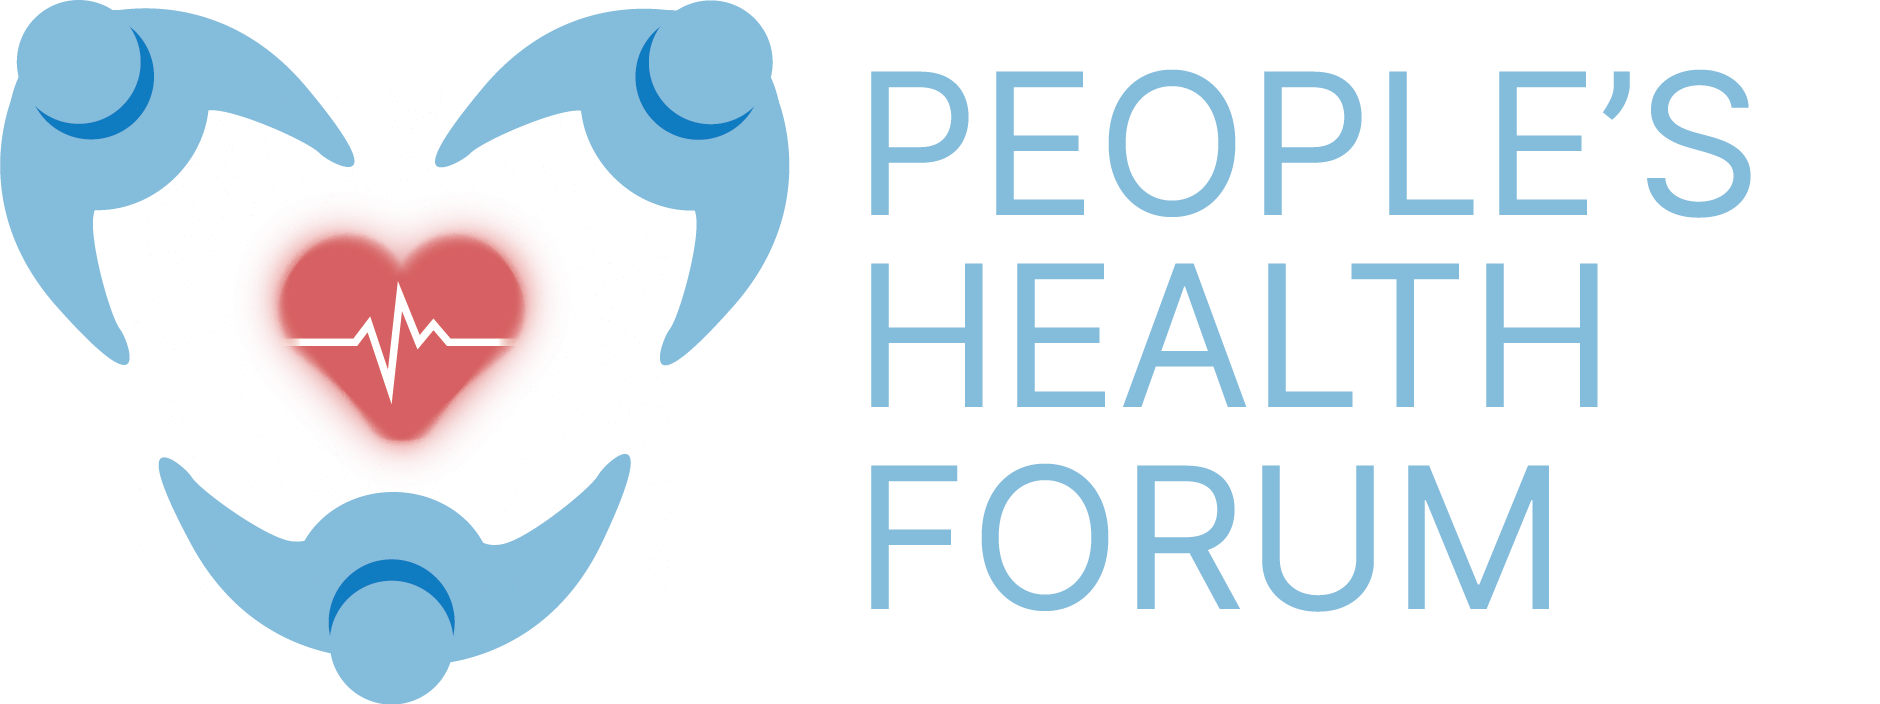 People's Health Forum